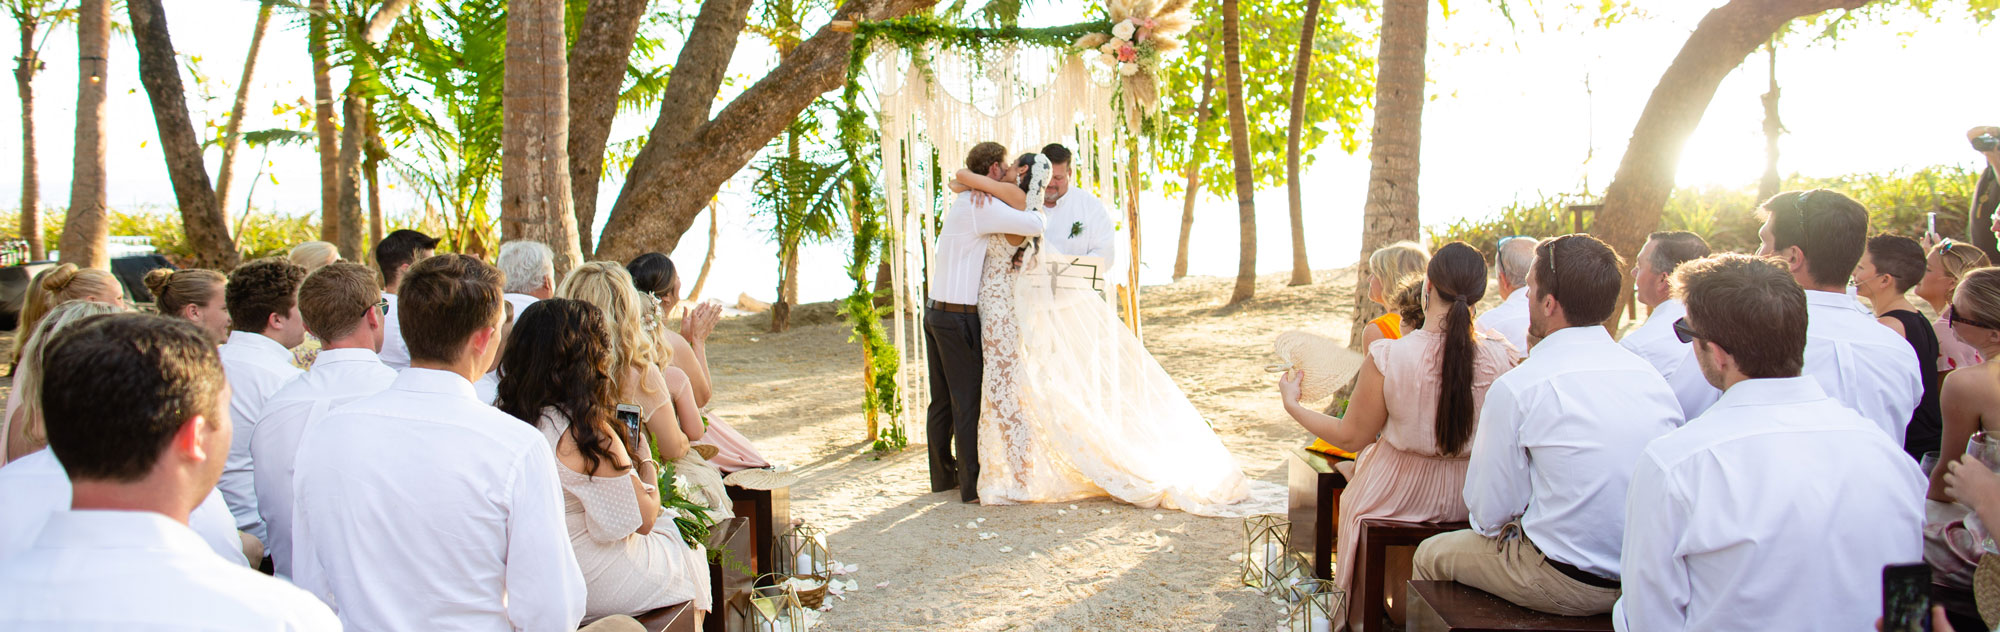 Costa Rica Wedding Destinations: 4 Tips + 2 Wedding Villas to Consider